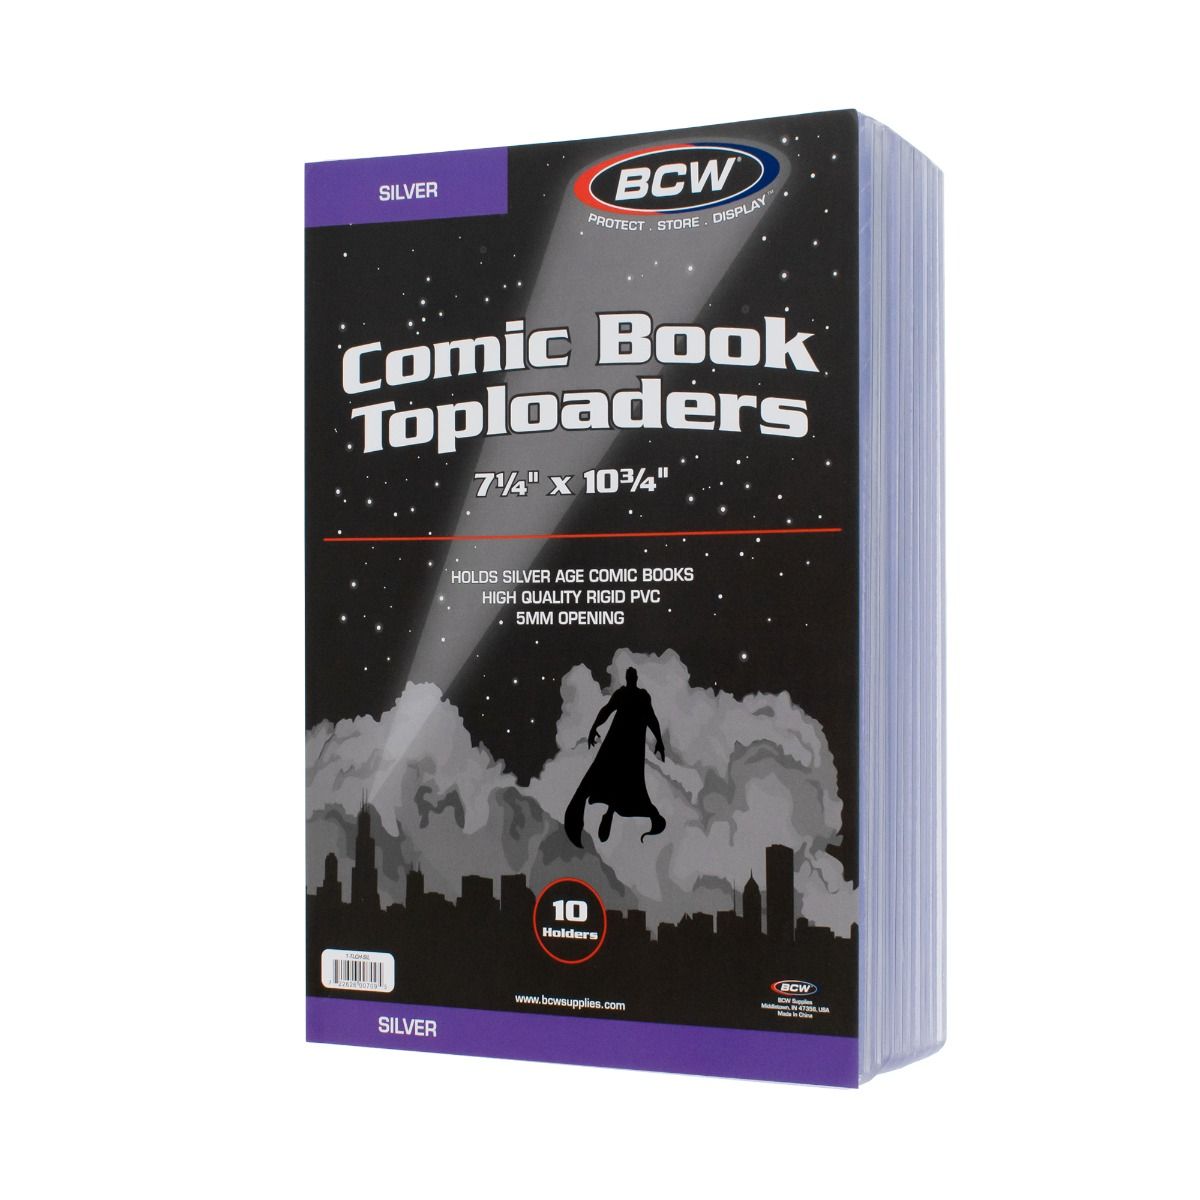 Comic Book Top Loader, 7 x 10 3/4, 10 pack